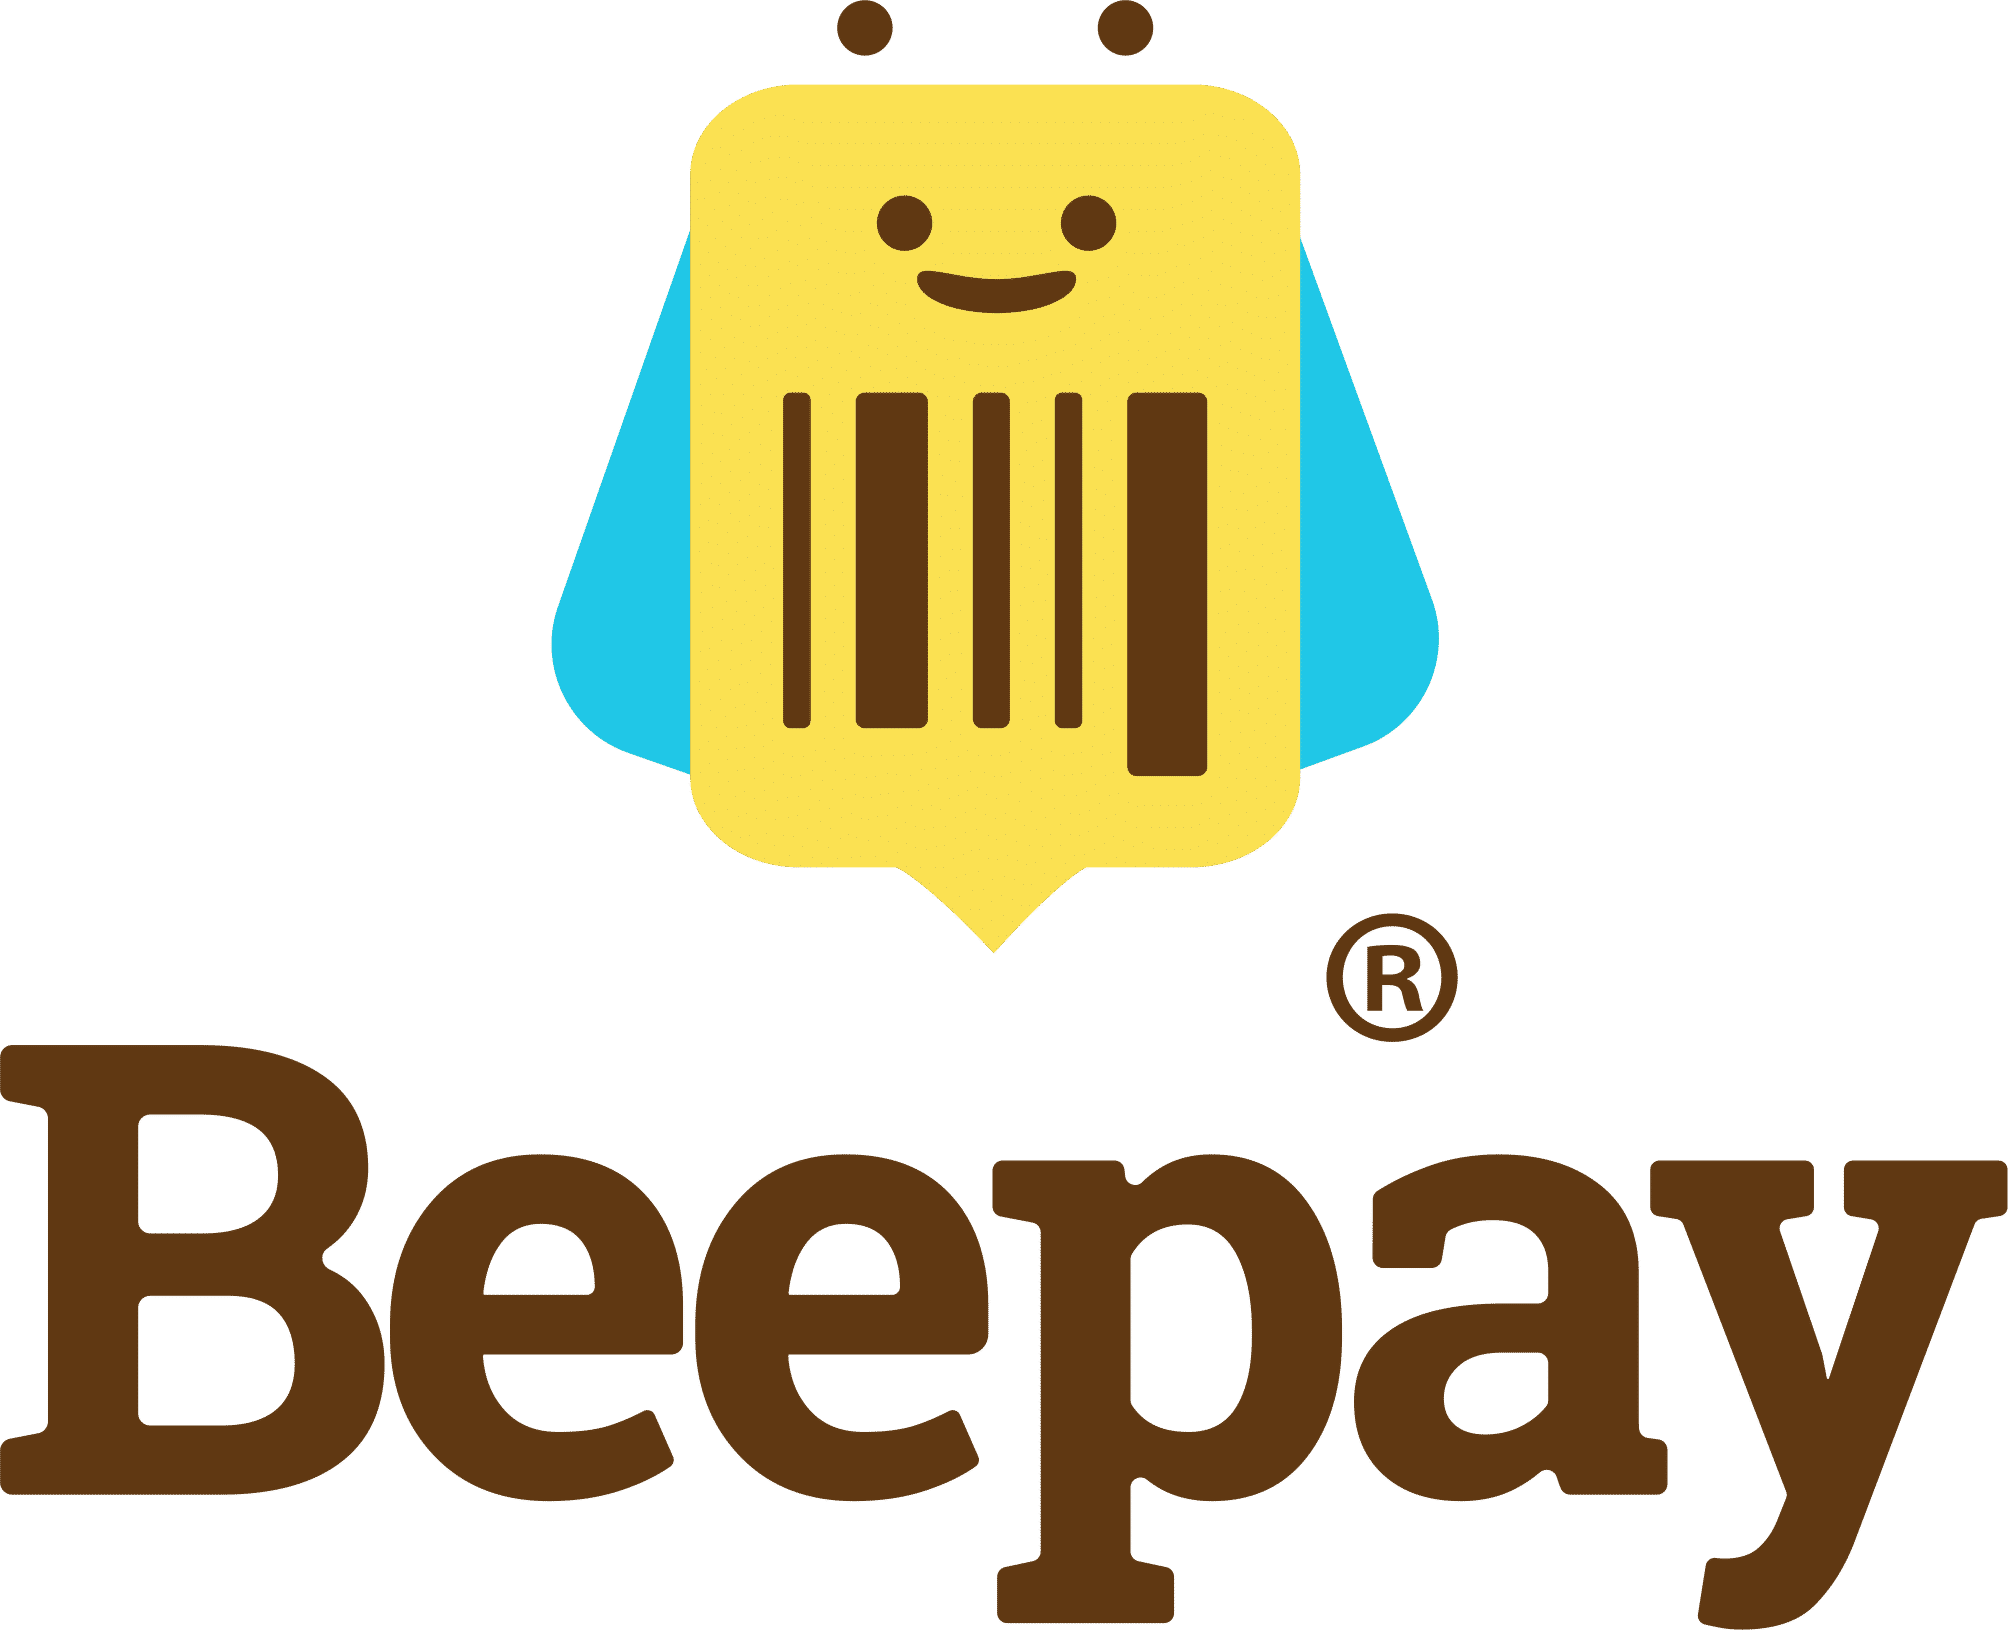 Beepay